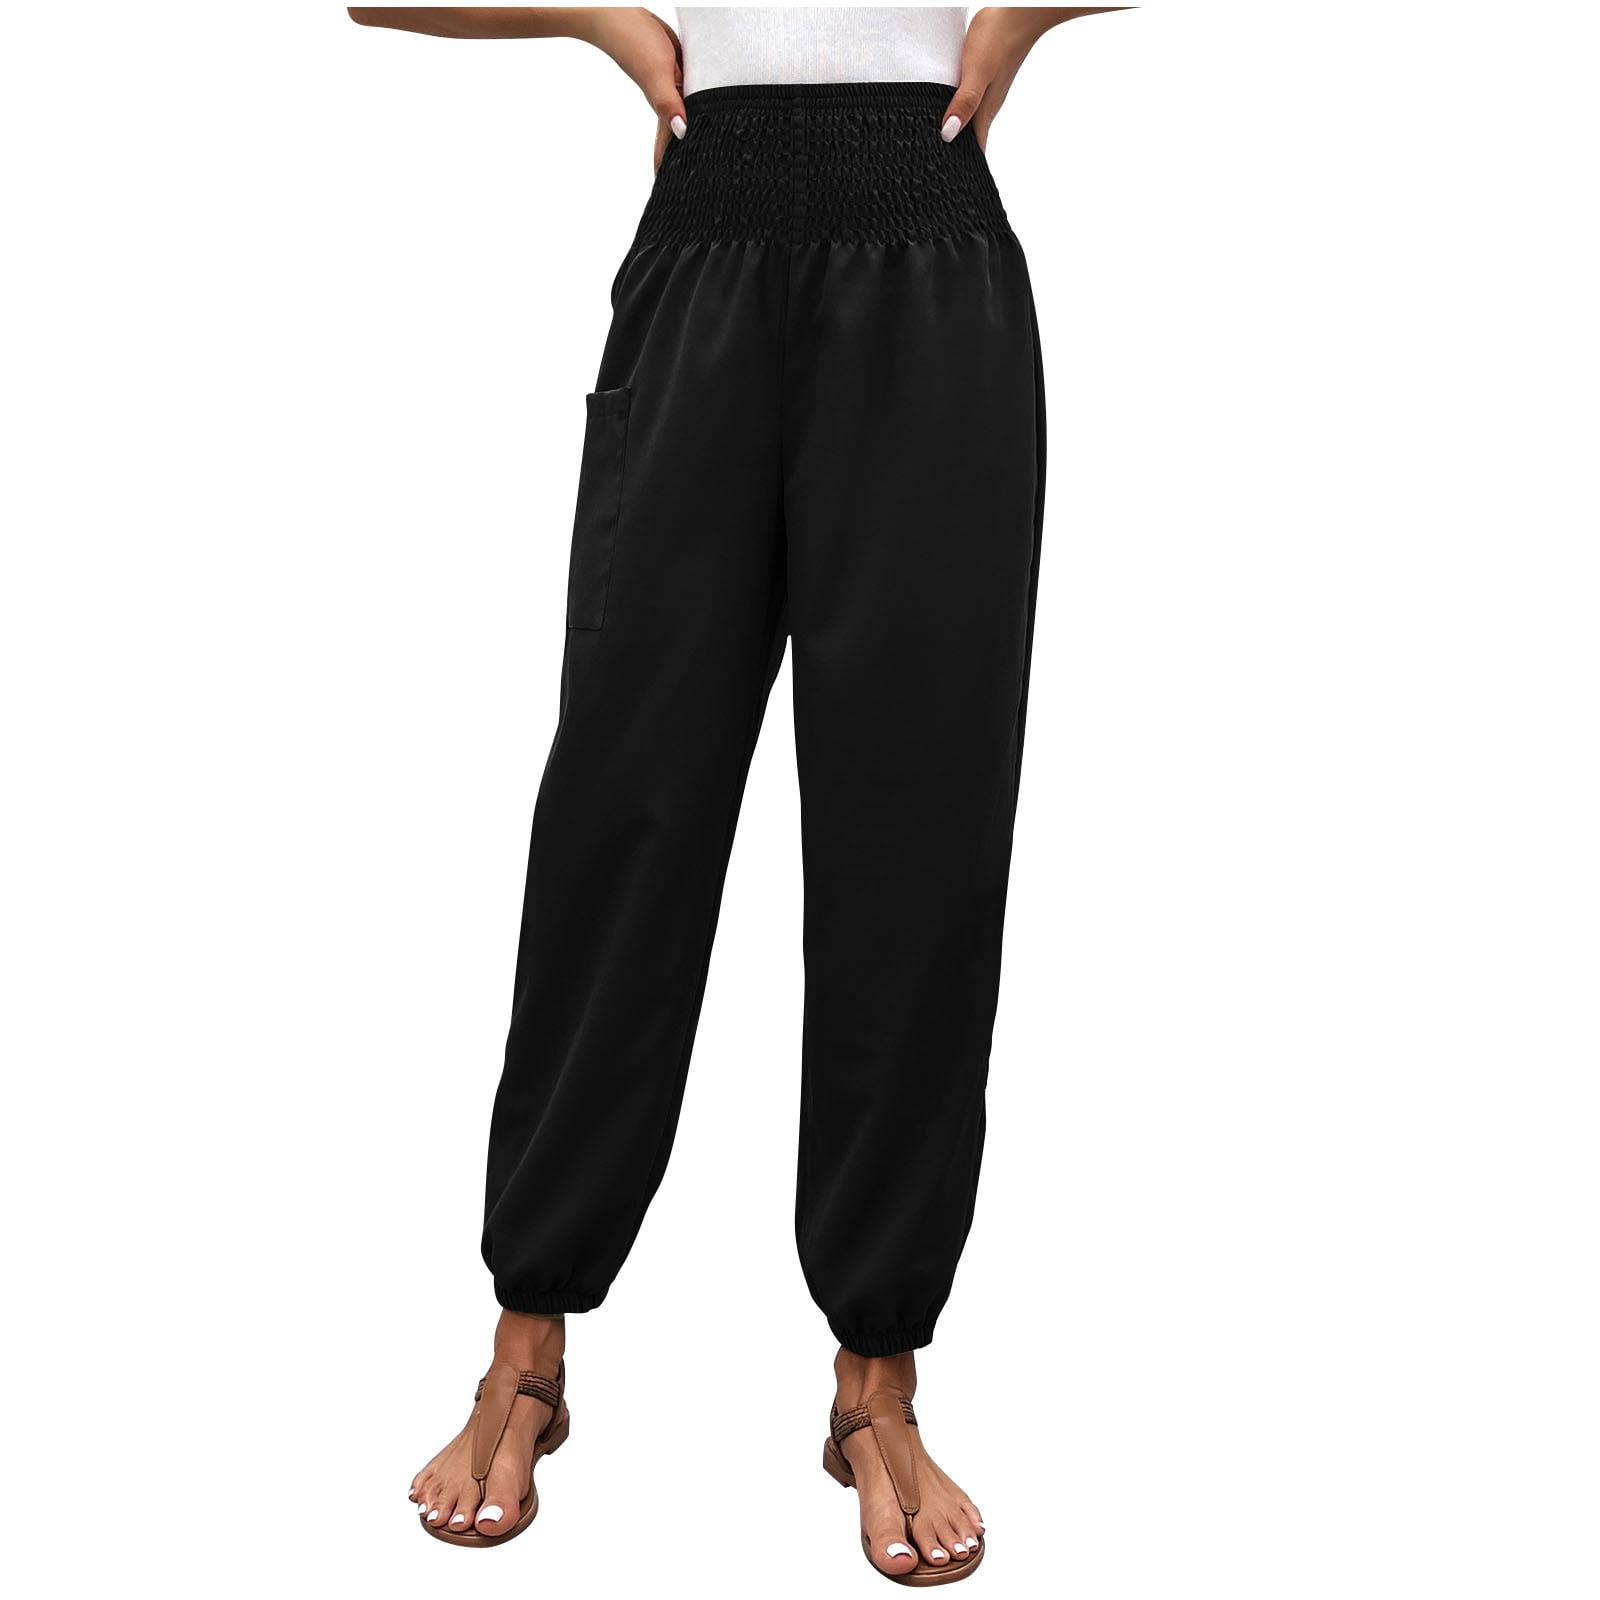 RYRJJ Women's Smocked Ruffle High Waisted Harem Pants with Pockets Plus Size Soft Comfy Yoga Joggers Casual Pajamas(Black,5XL) - Walmart.com